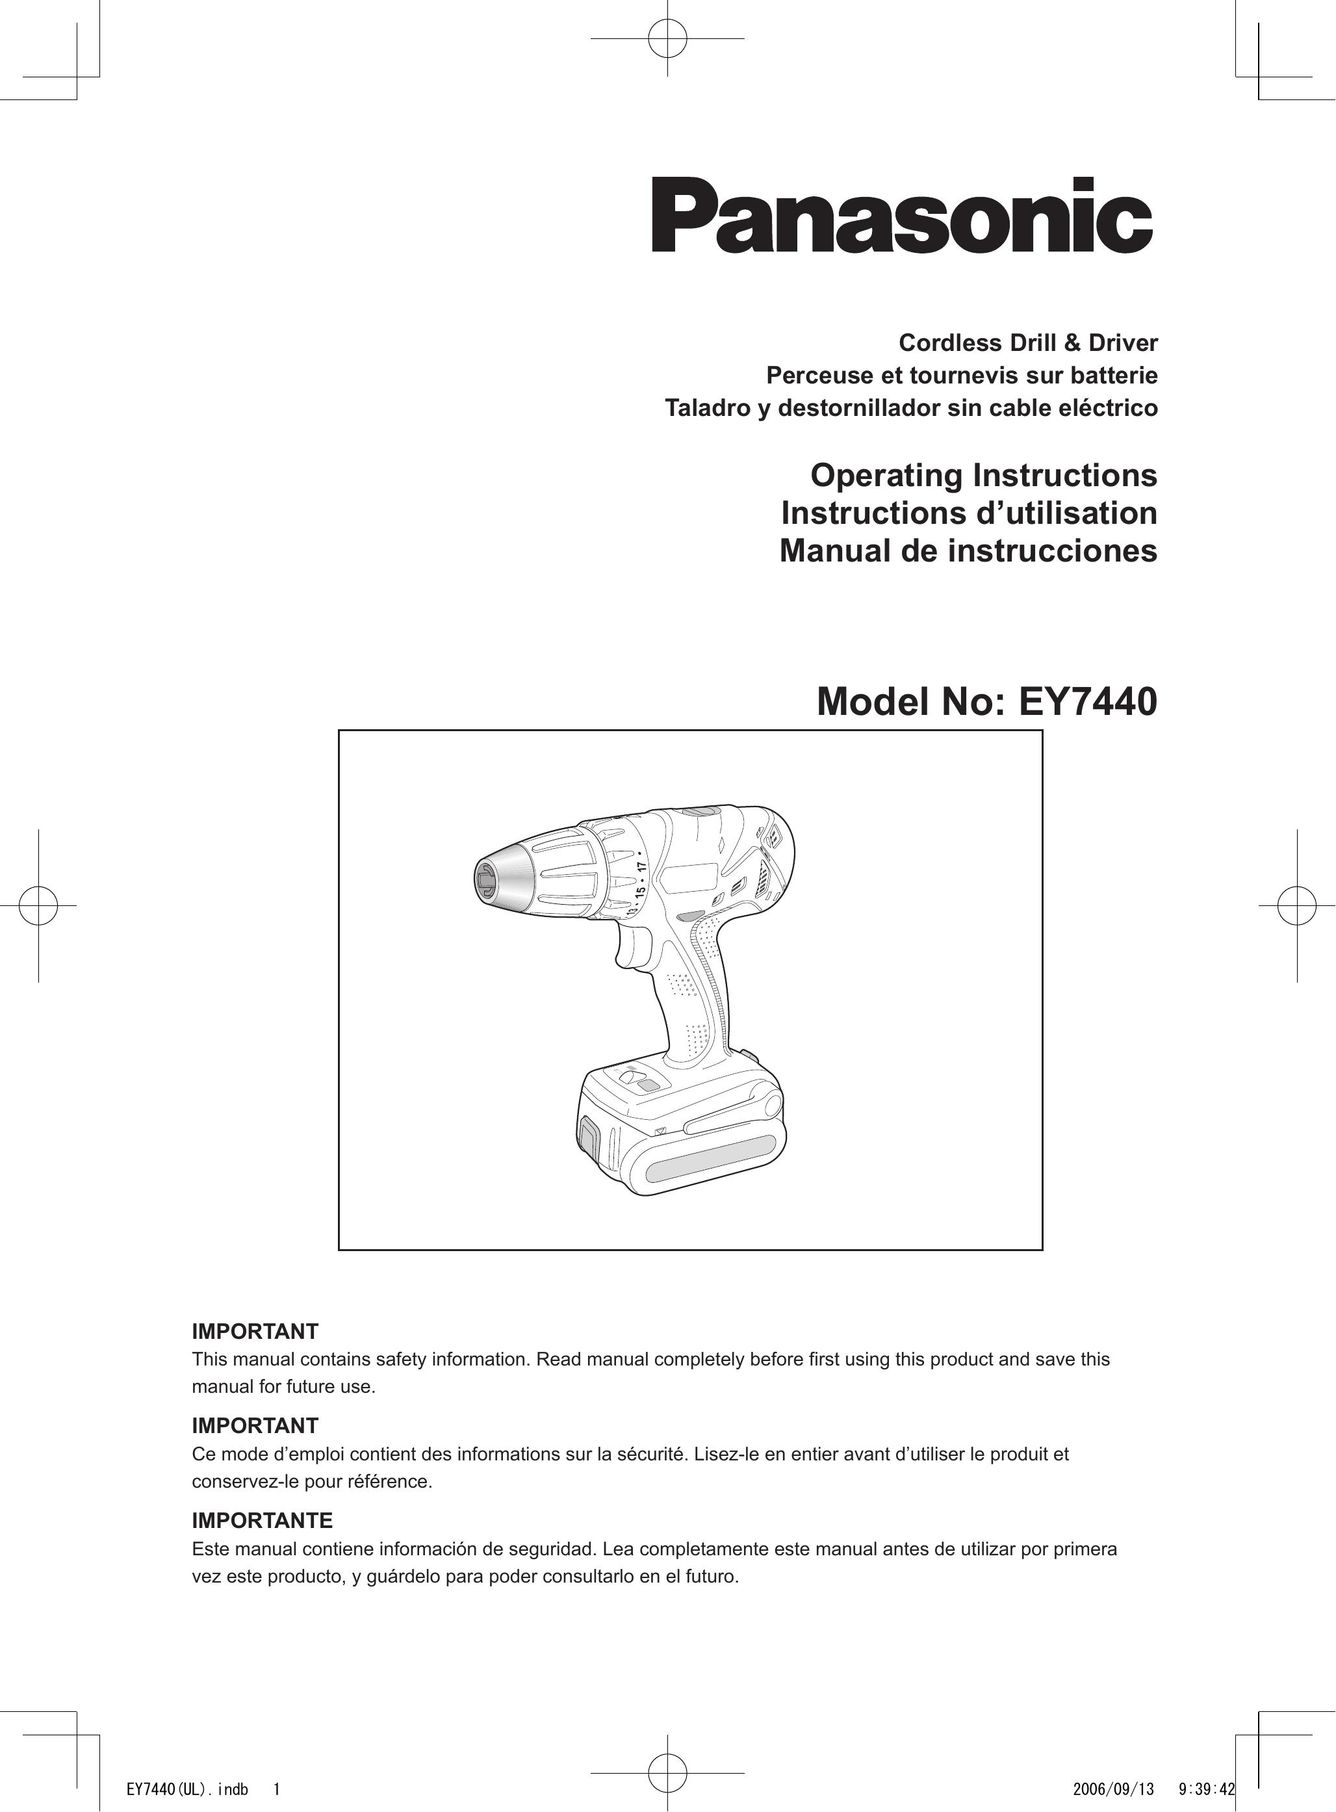 Panasonic EY7440 Drill User Manual